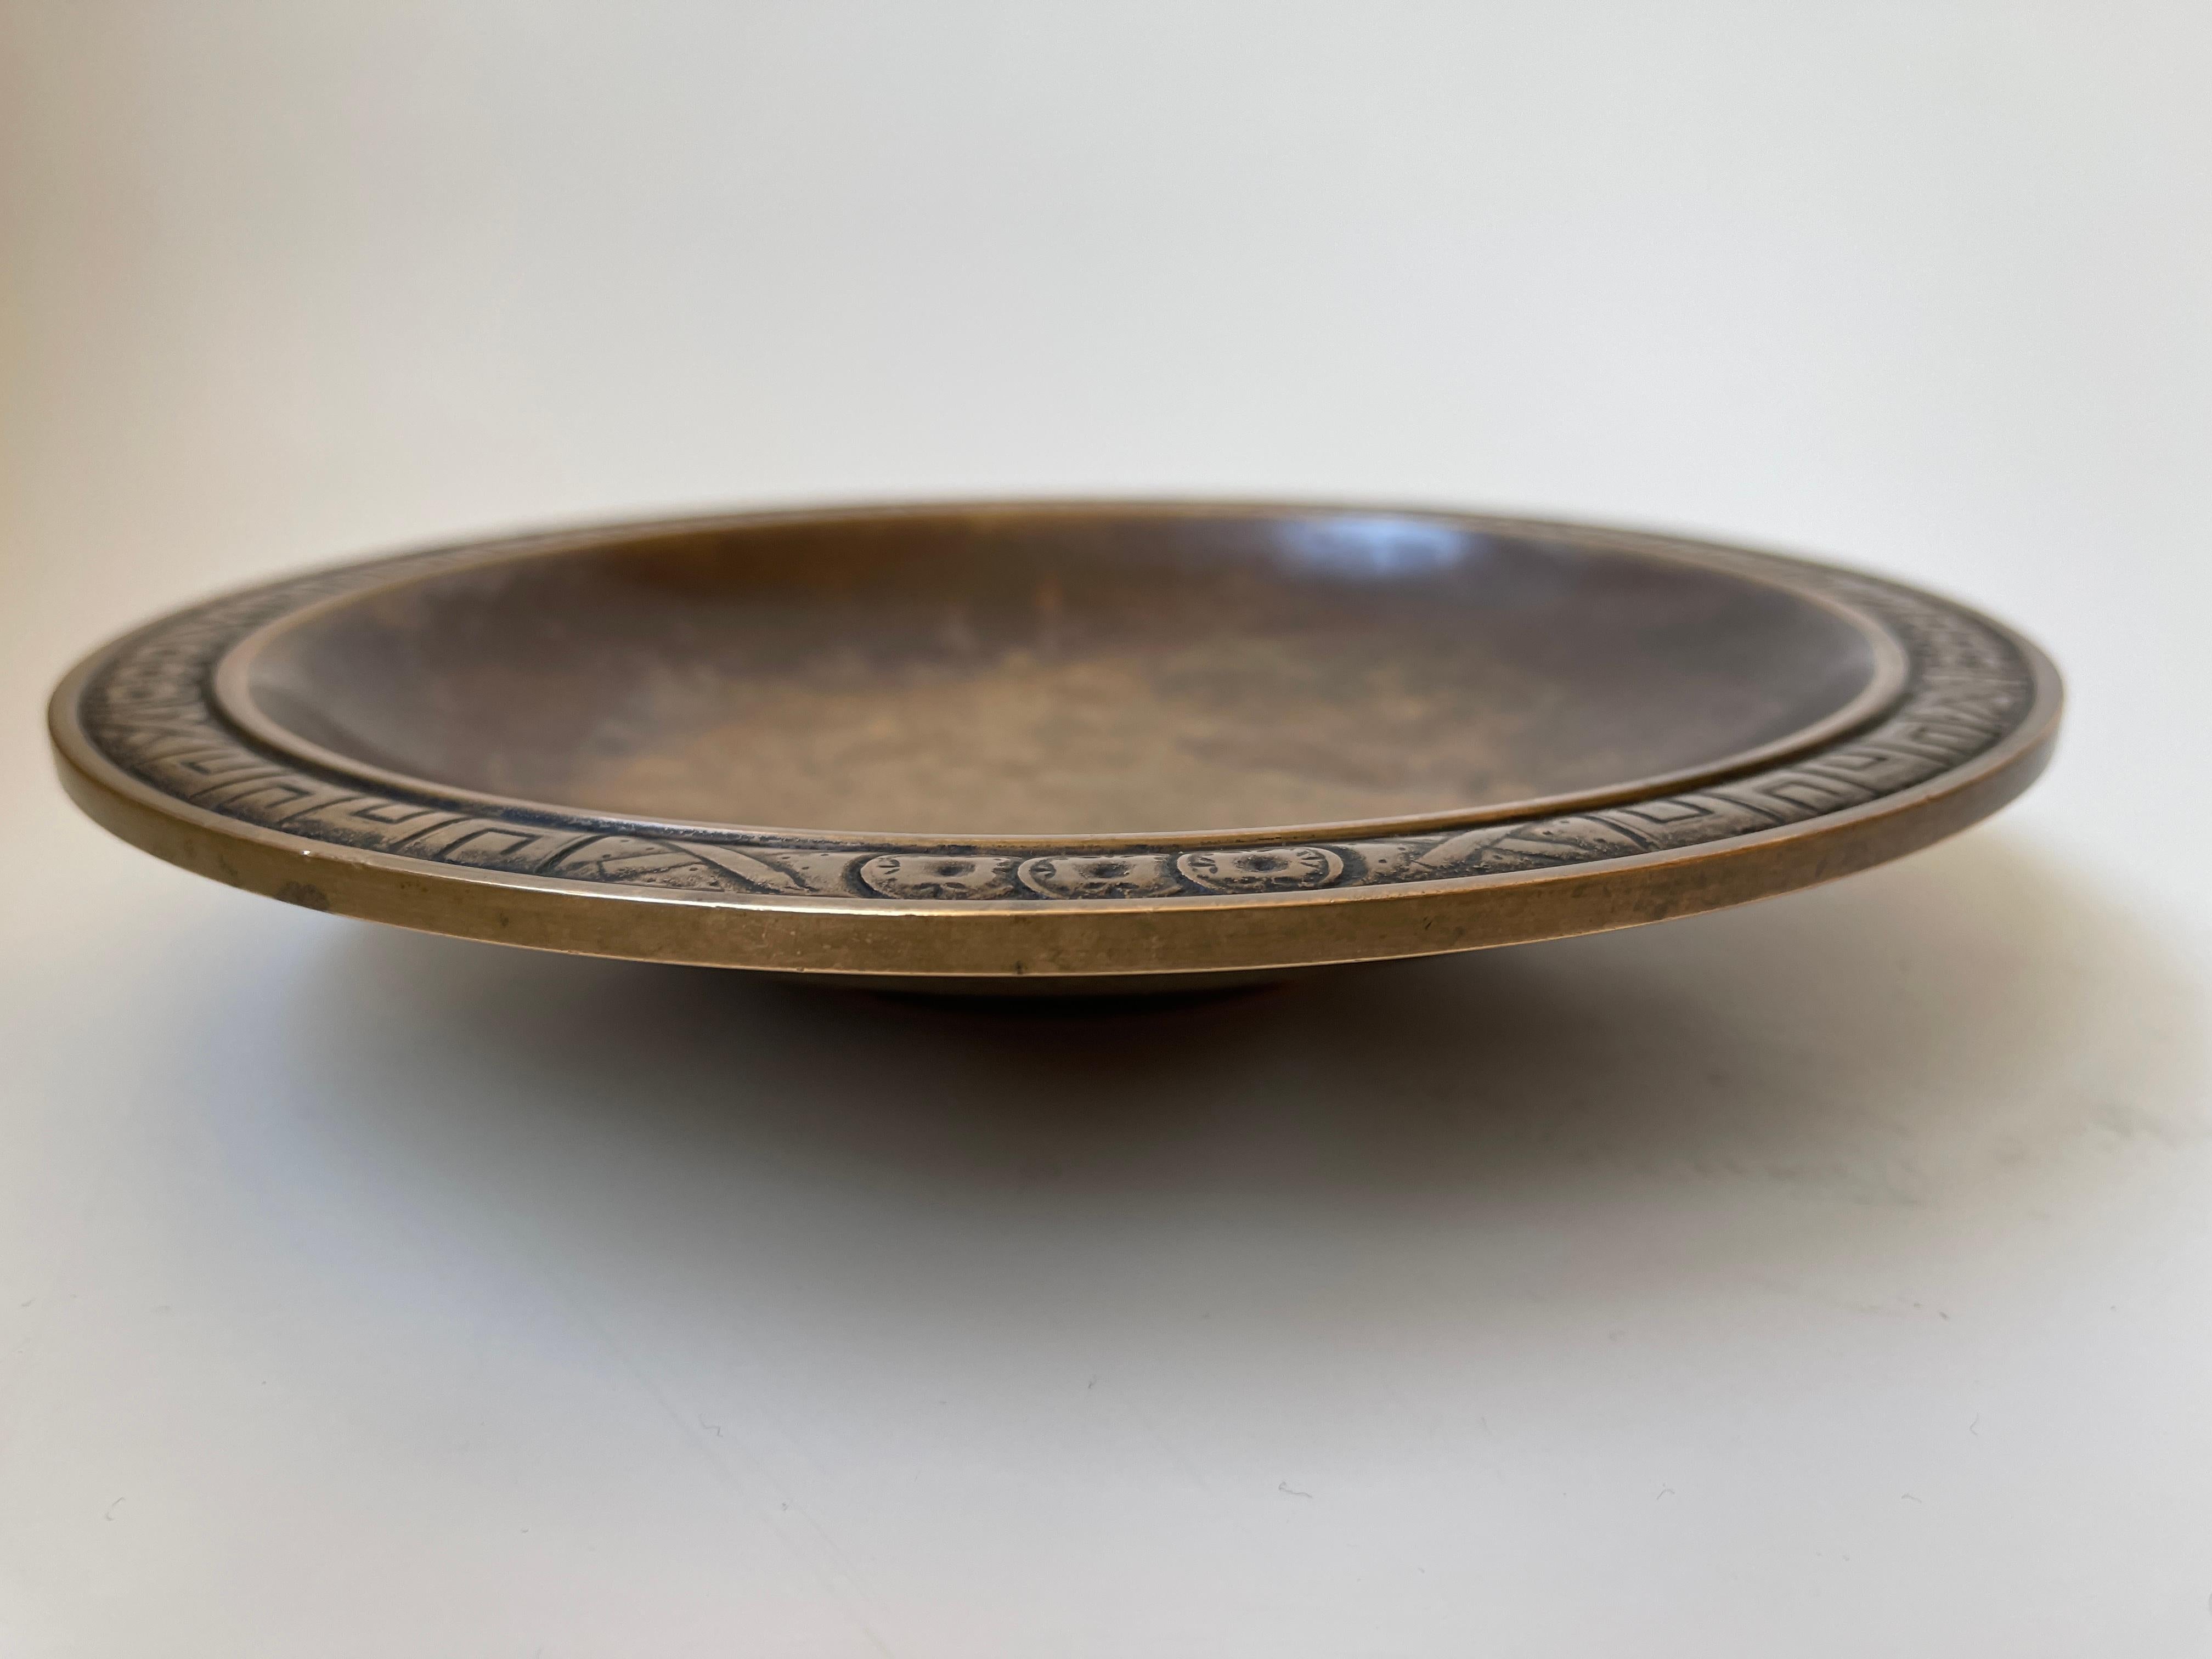 Danish Art Deco patinated bronze centrepiece bowl with low pedestal base.
Engraved rim with ancient Scandinavian symbols. Denmark, c.1930's.